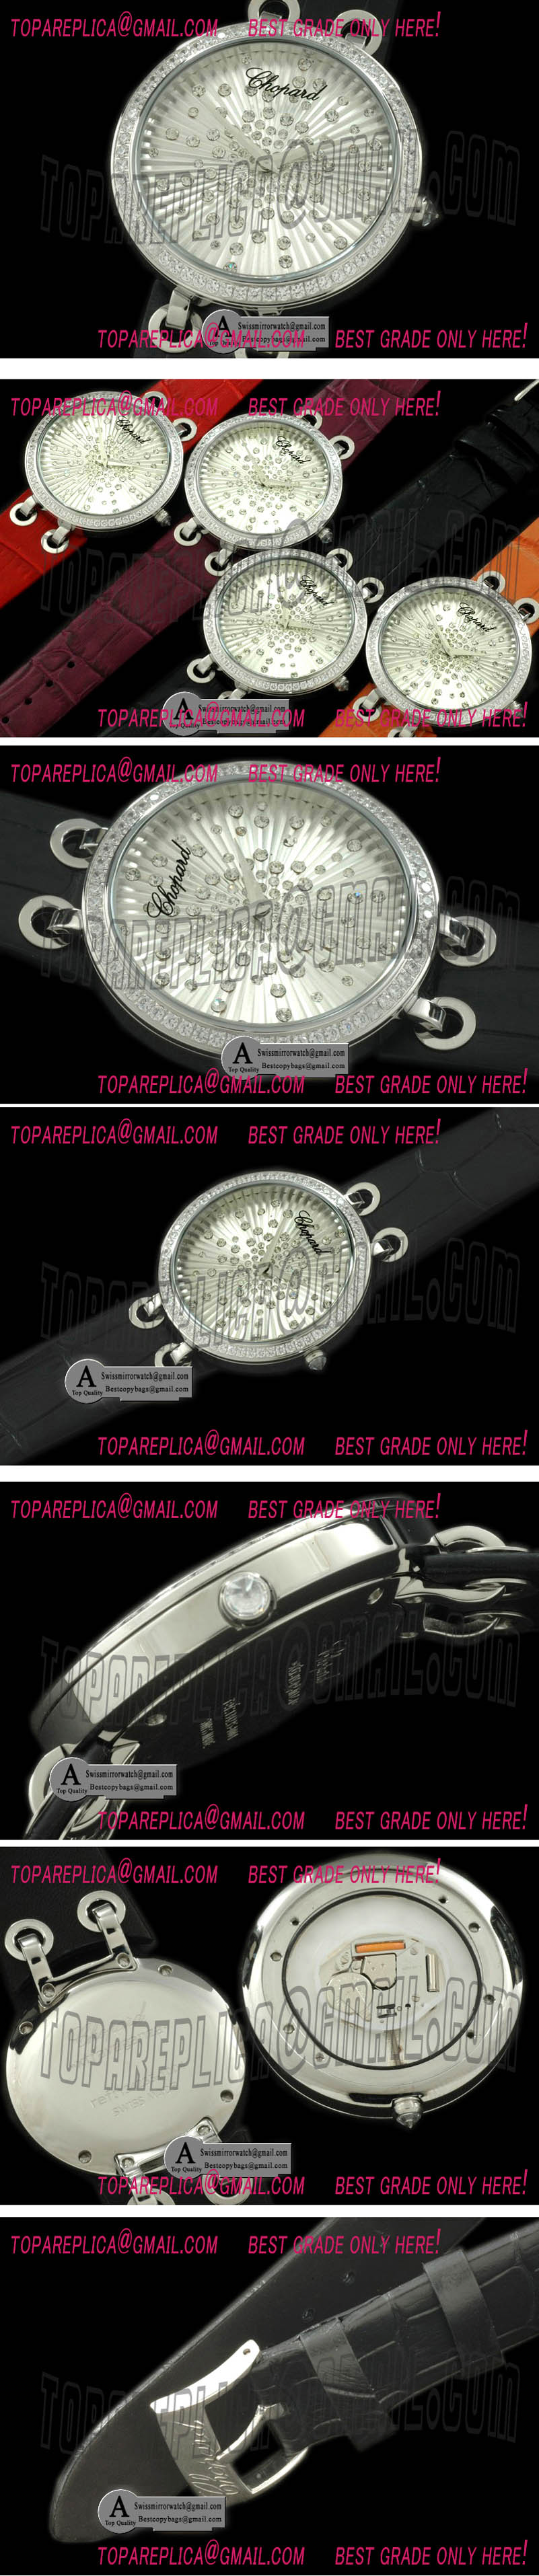 Chopard Xtravagaza Mid SS Leather Silver Swiss Quartz Replia Watches